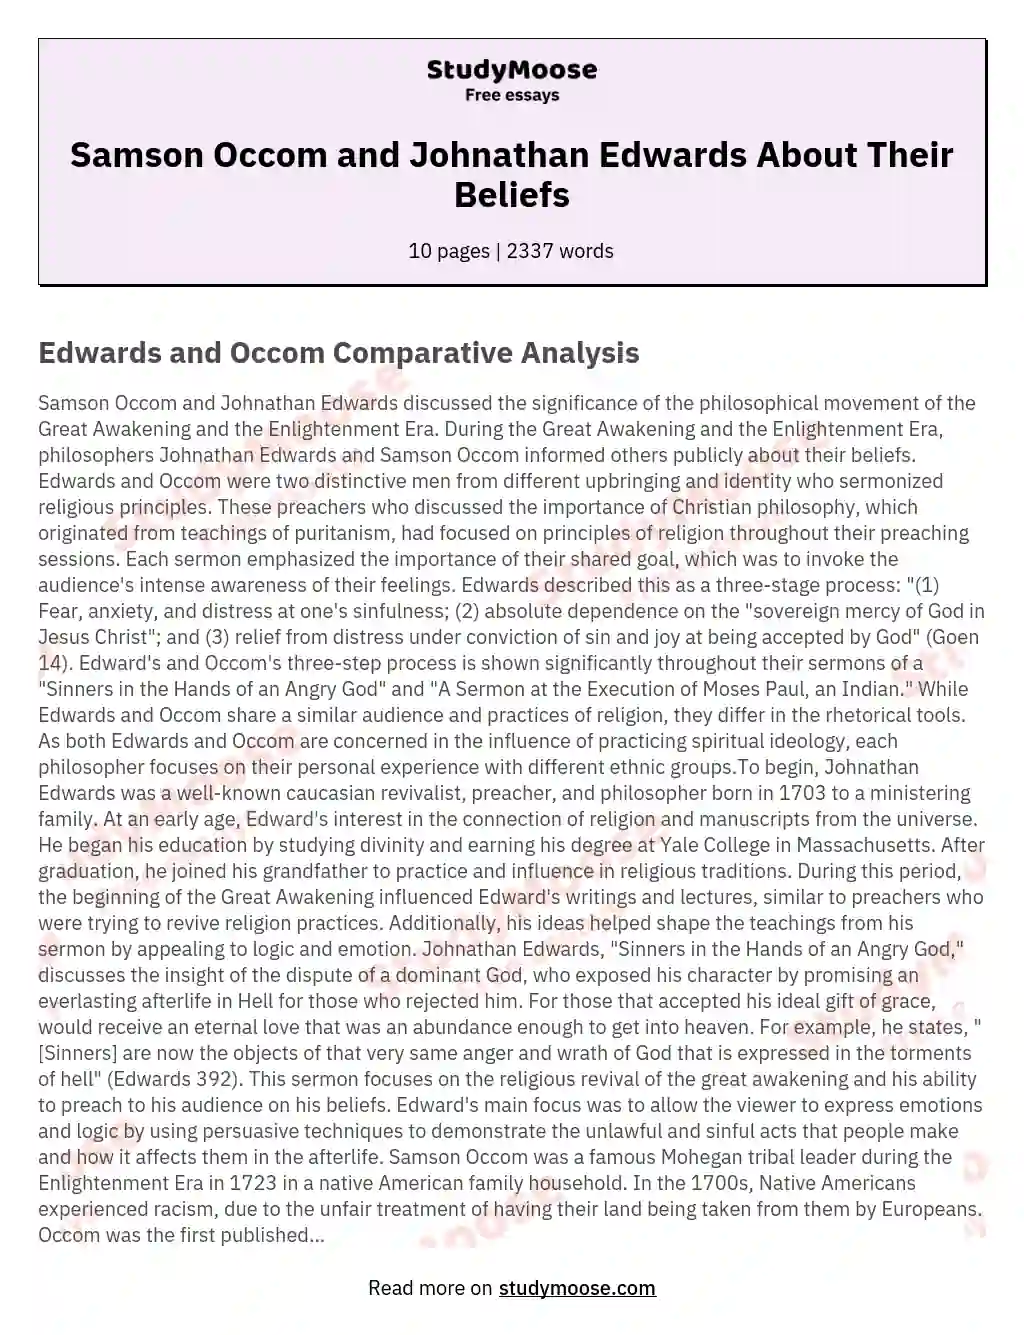 Samson Occom and Johnathan Edwards About Their Beliefs essay